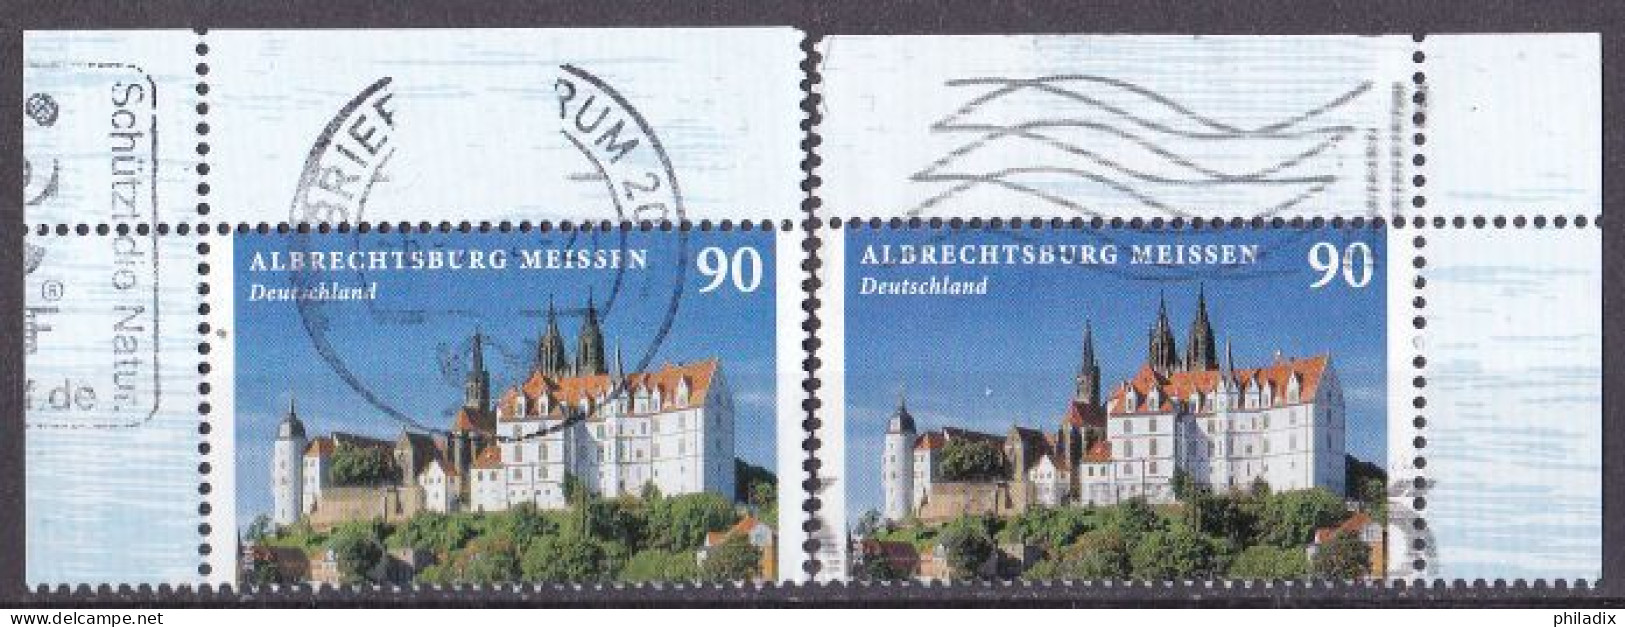 BRD 2014 Mi. Nr. 3062 O/used Eckrand Rechts/links (BRD1-7) - Used Stamps